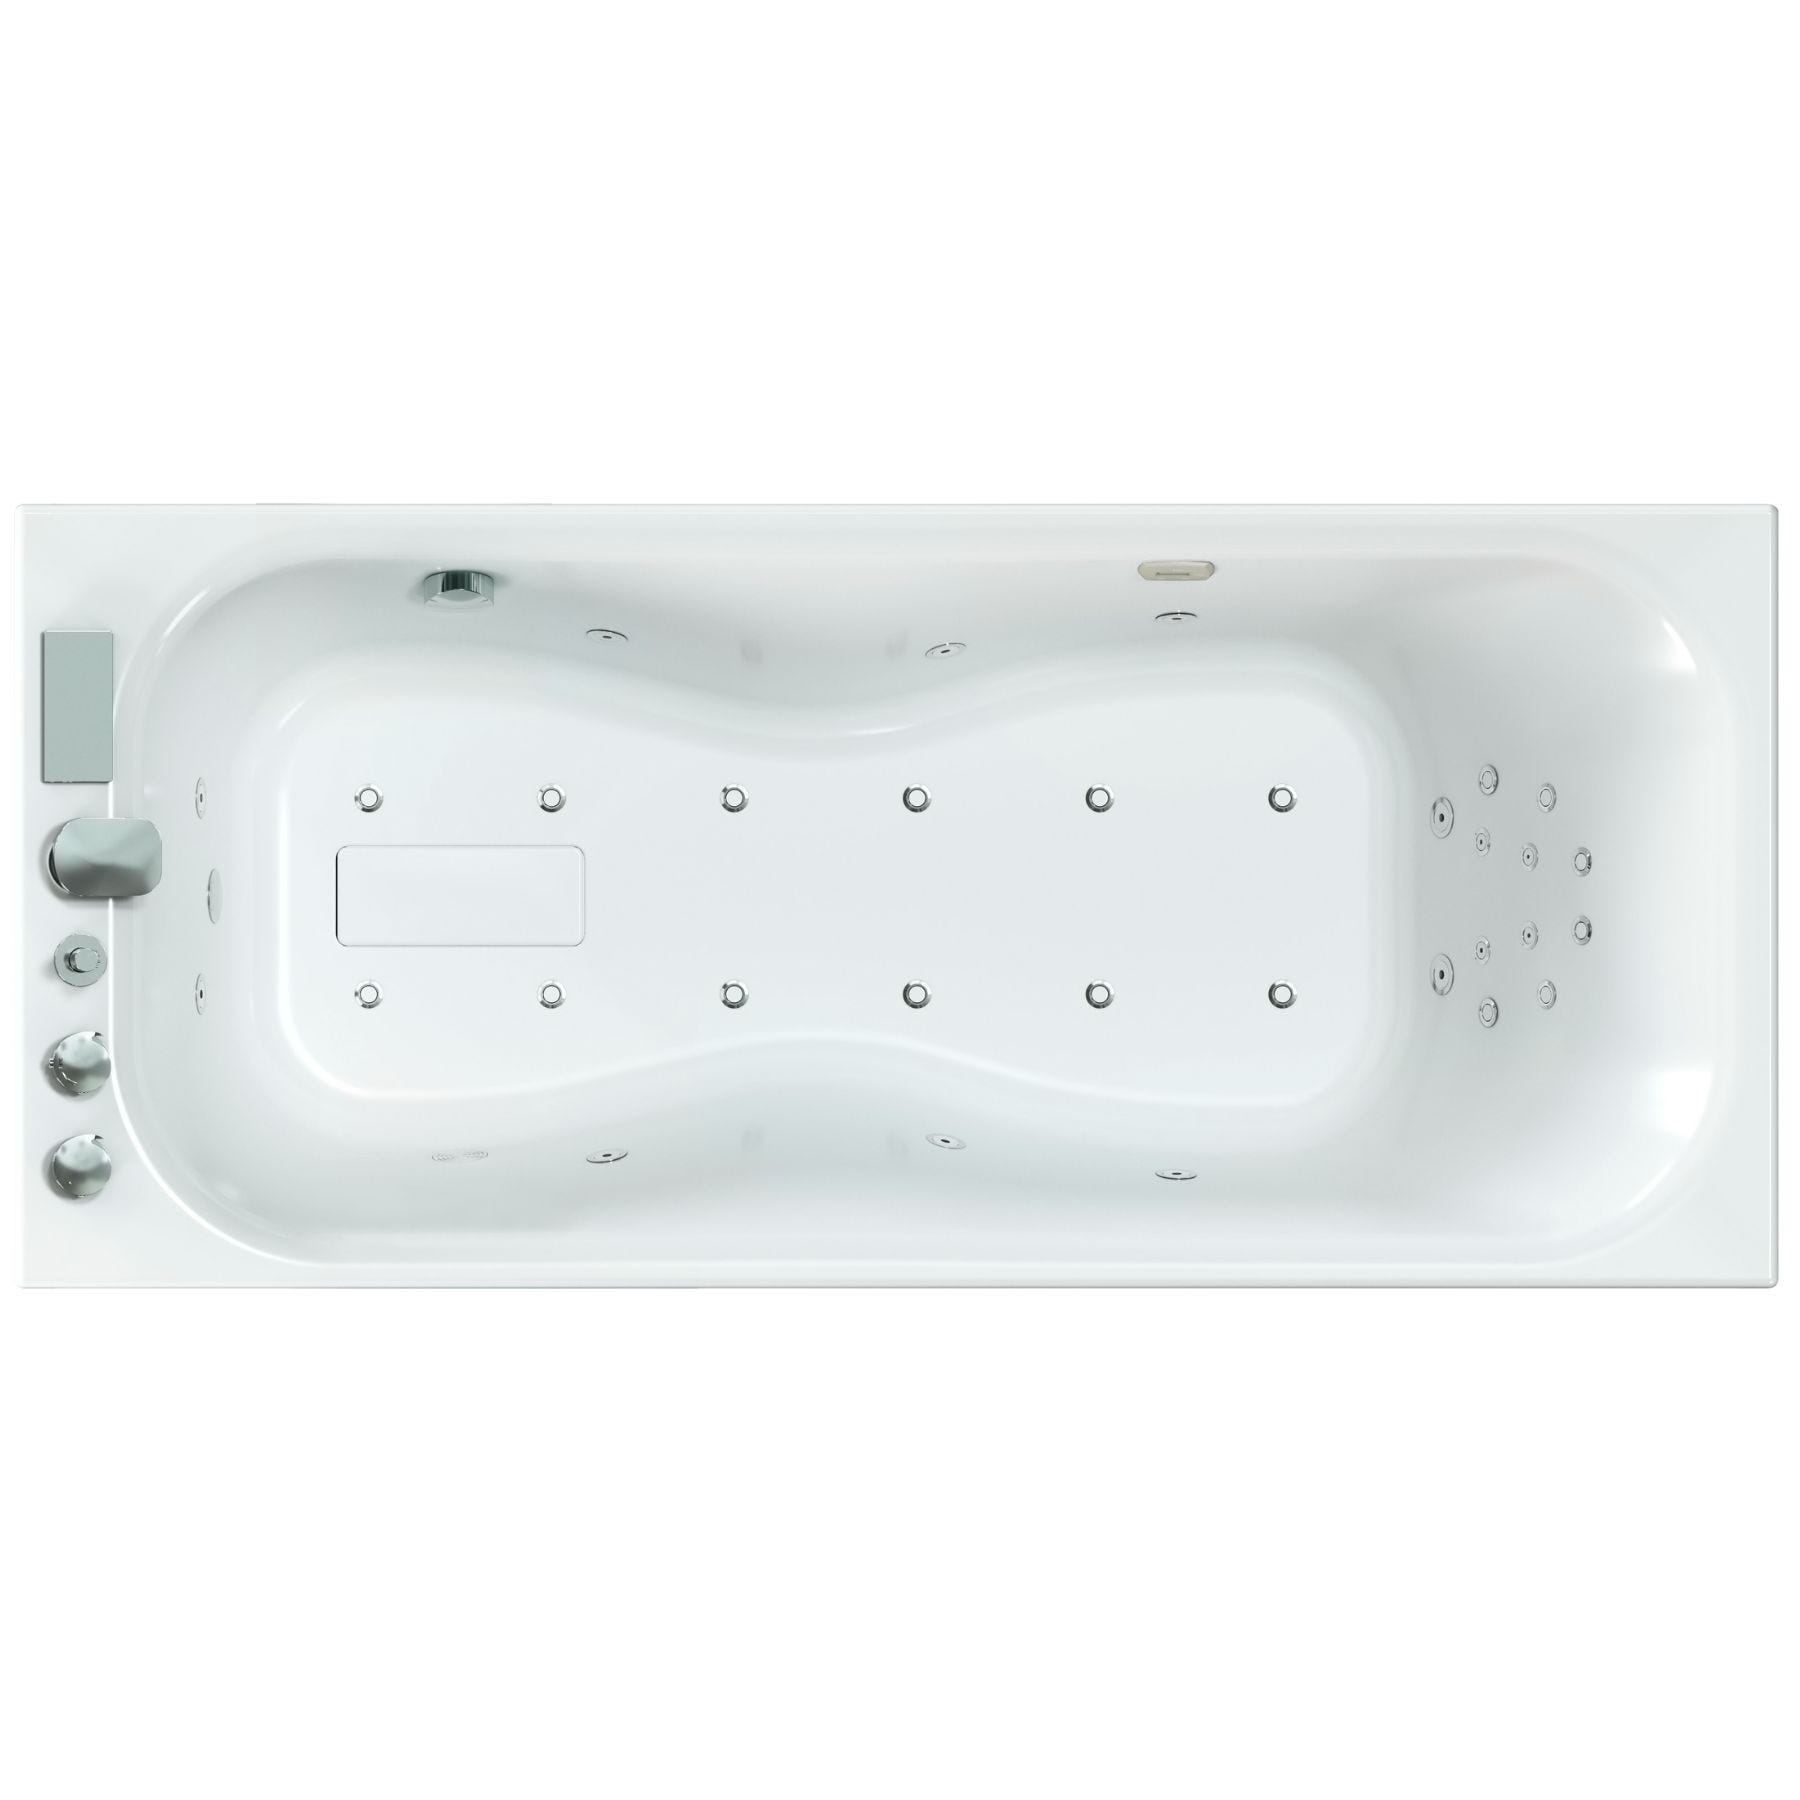 Baignoire balnéo ZUMBA 170x70 sur châssis métal, système balnéo SILENCE & AIR tête bain à droite finition blanche mat non brillante 1